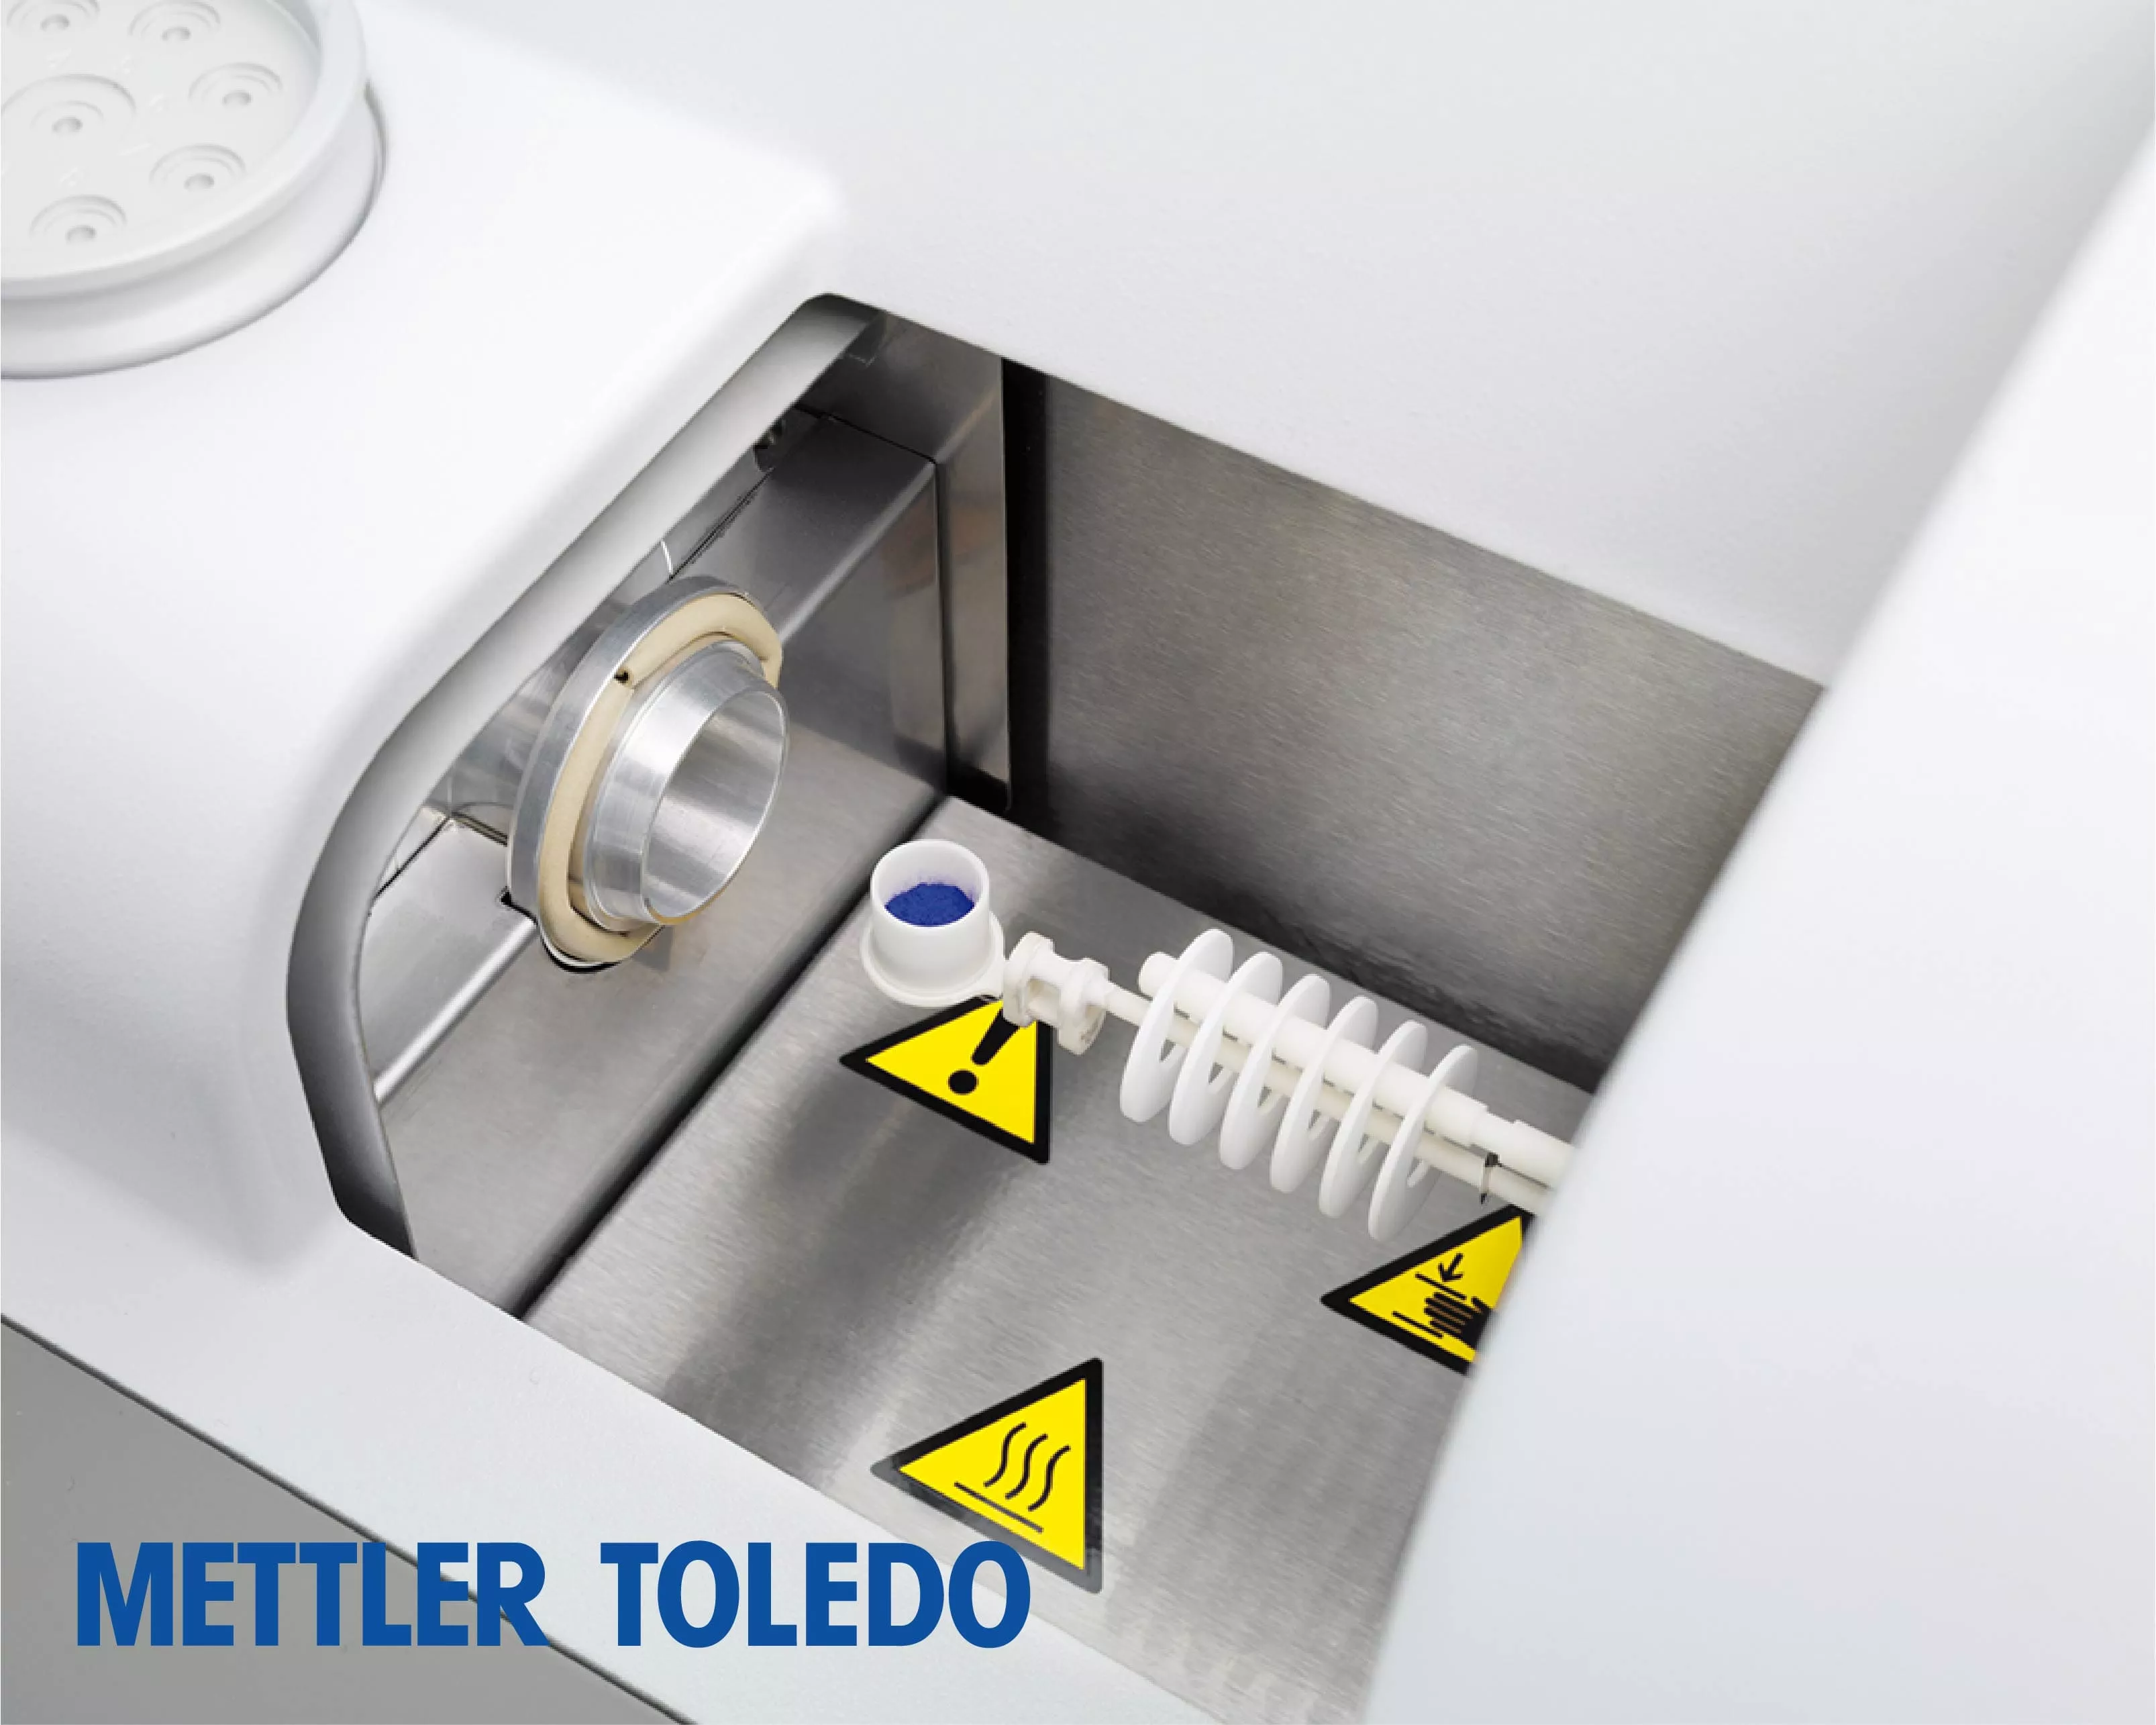 Mettler Toledo Thermal Analysis